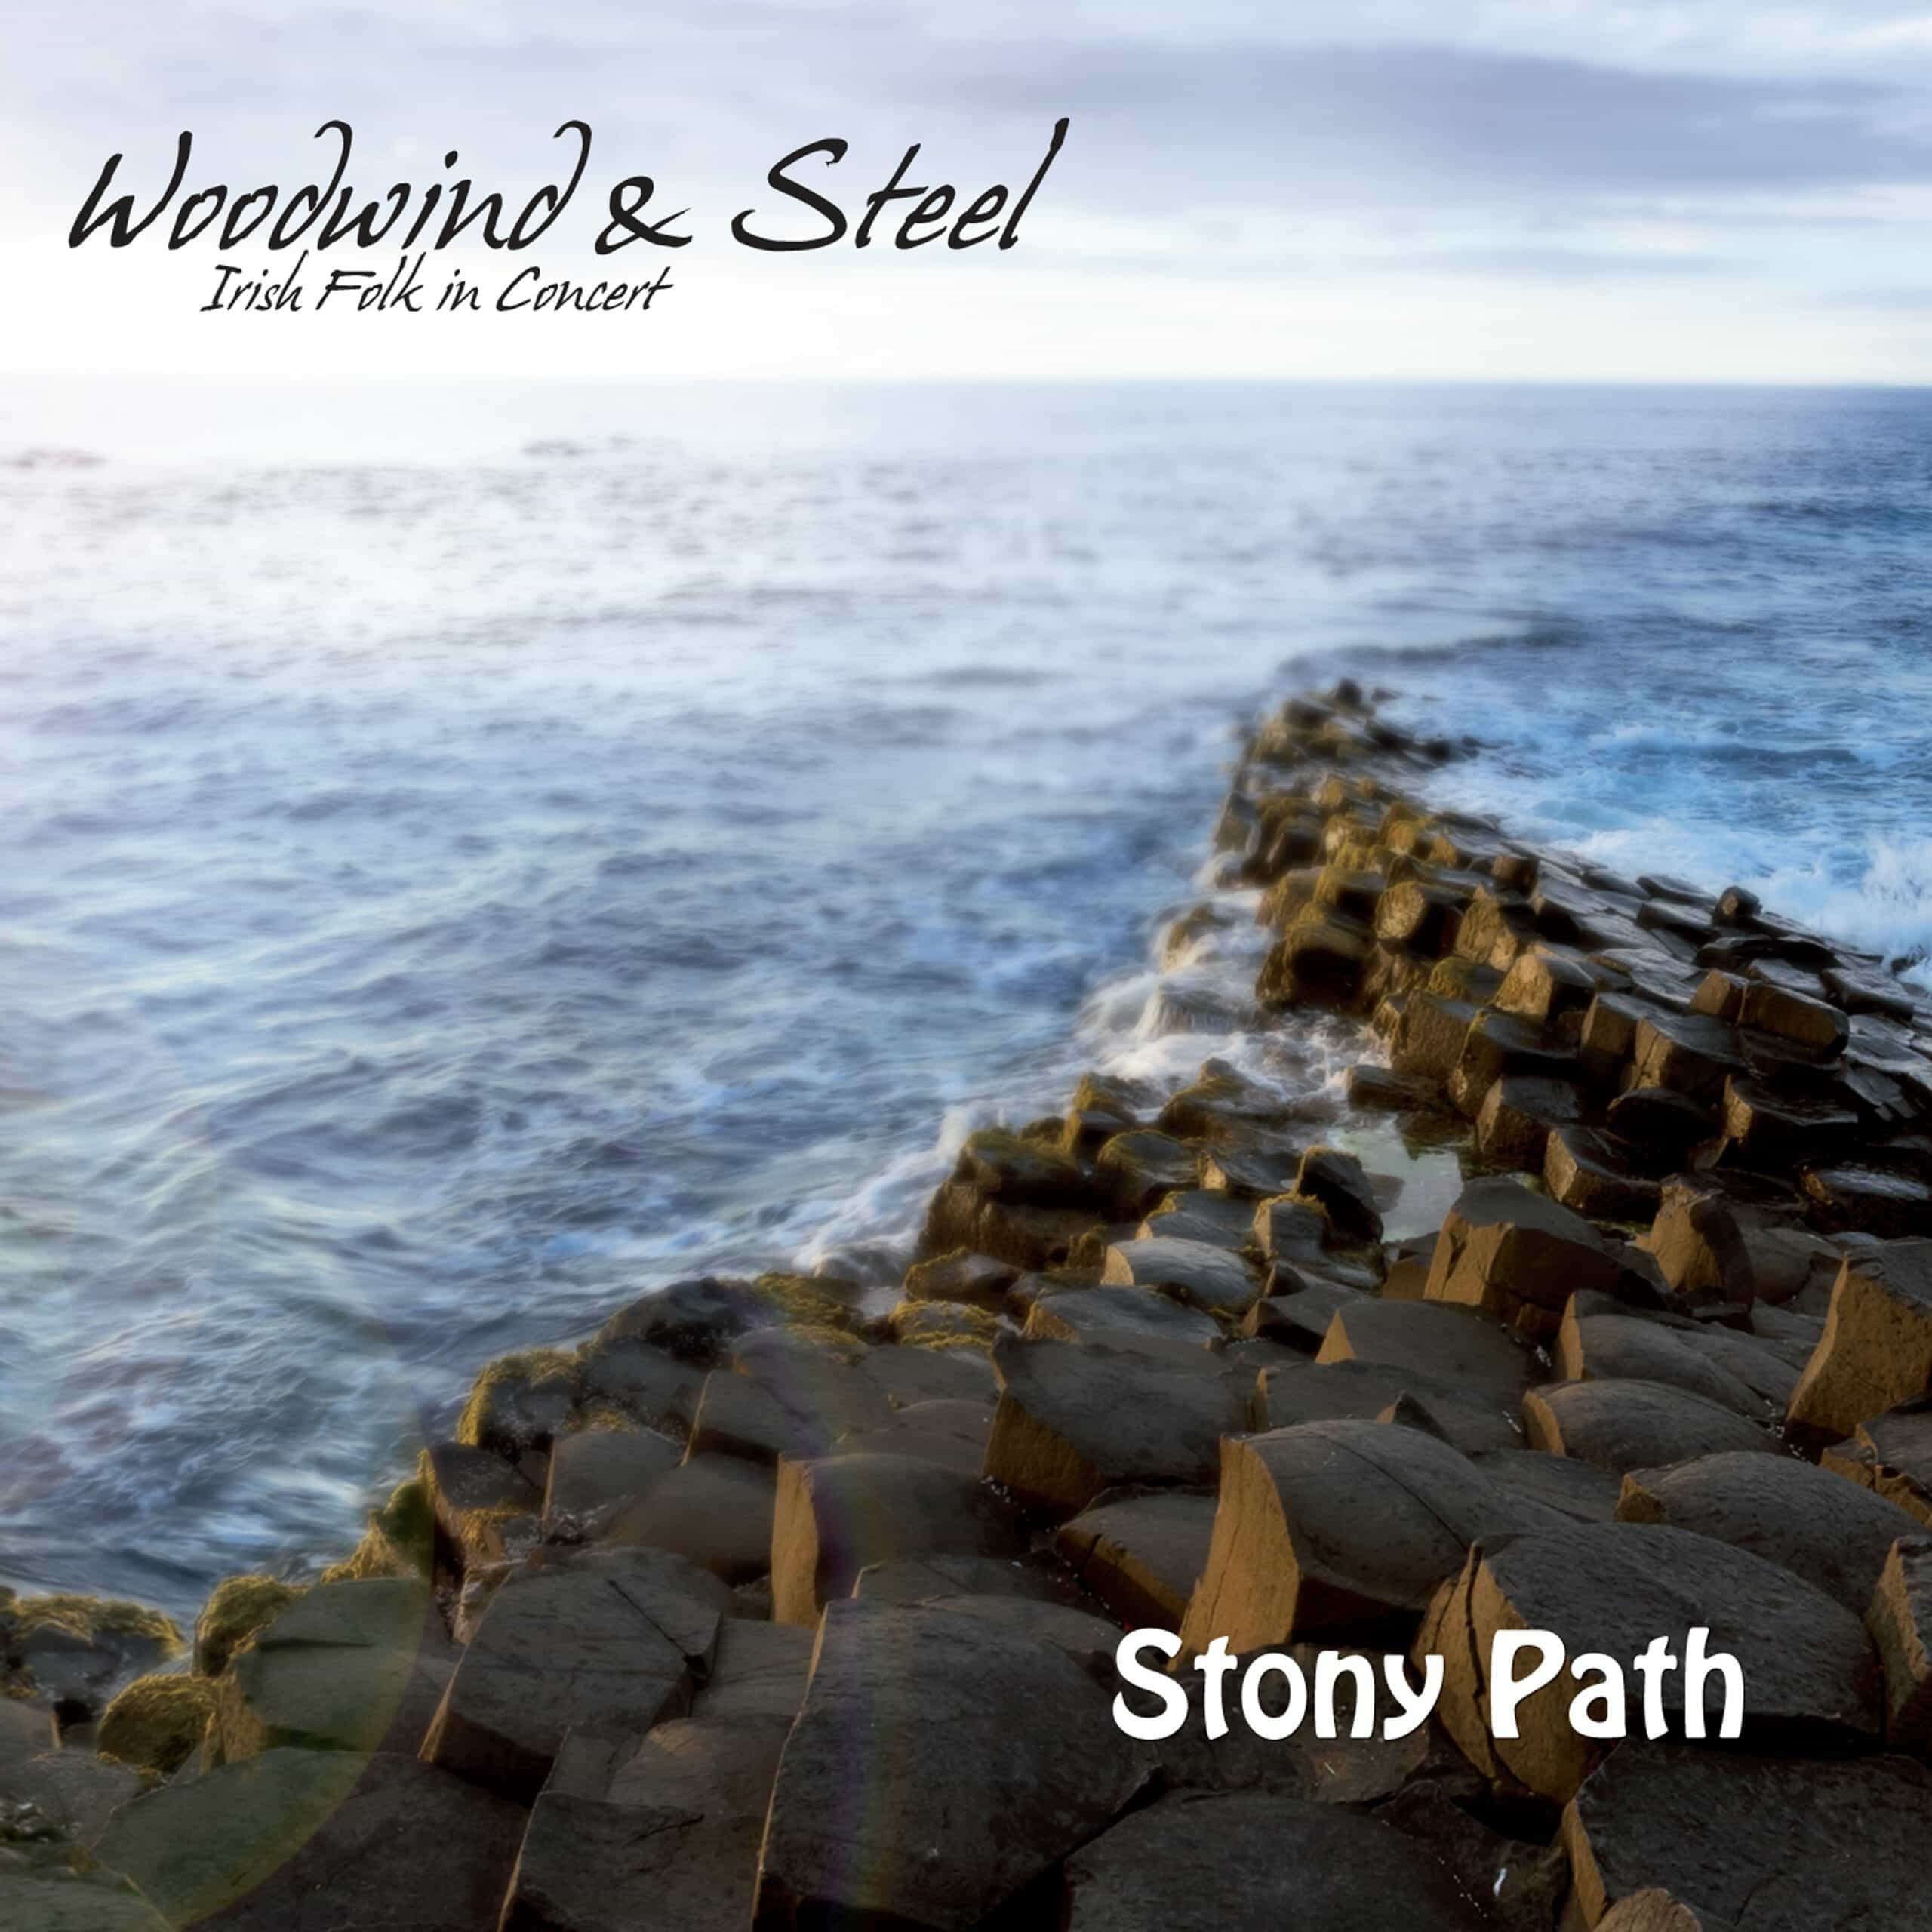 Woodwind and Steel - Irish Folk Band - Albumcover Stony Path